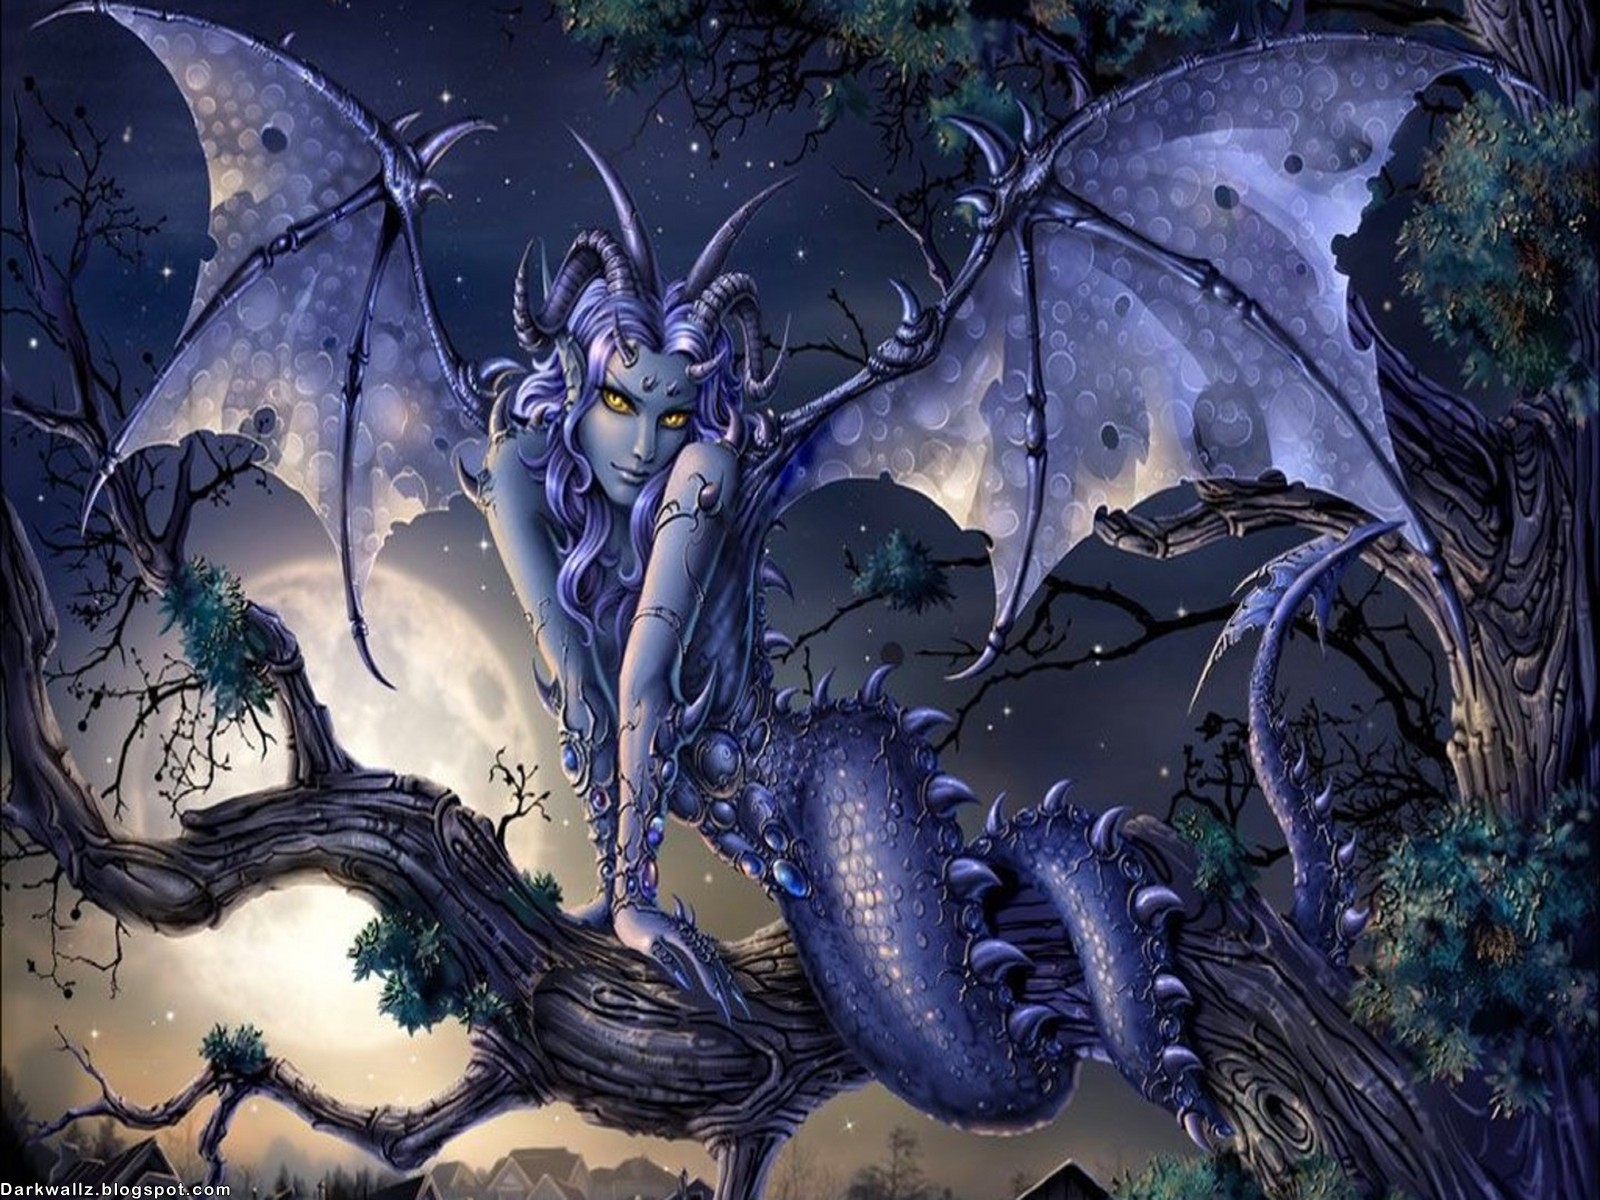  darkdark dragons wallpapers 59 dark wallpapers black gothic freehtm